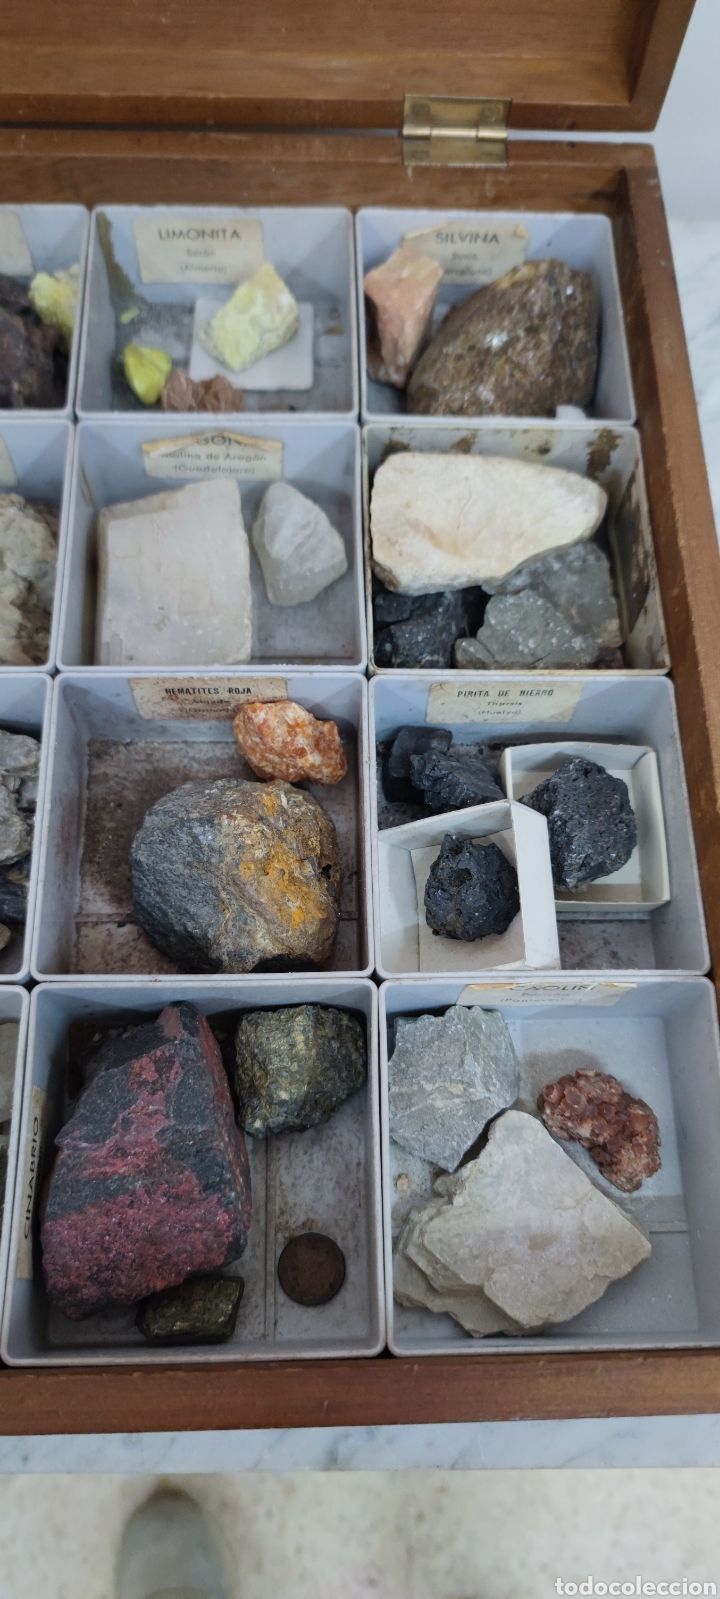 Coleccionismo de minerales: Caja expositora minerales - Foto 2 - 269416098